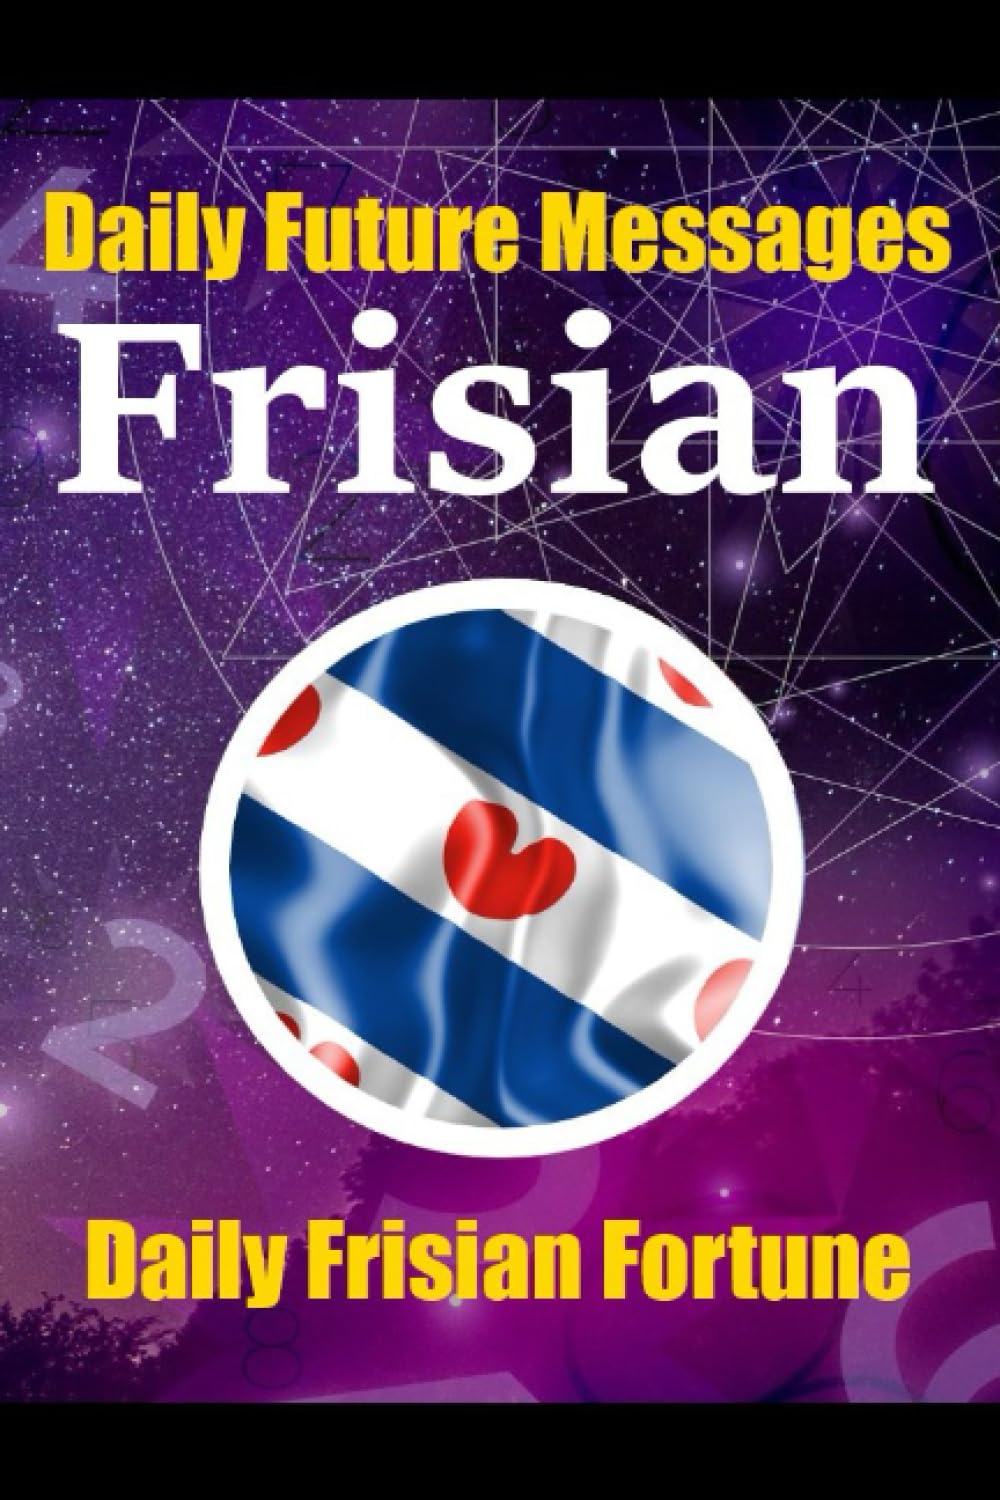 Learn the Frisian Language through Daily Random Future Messages